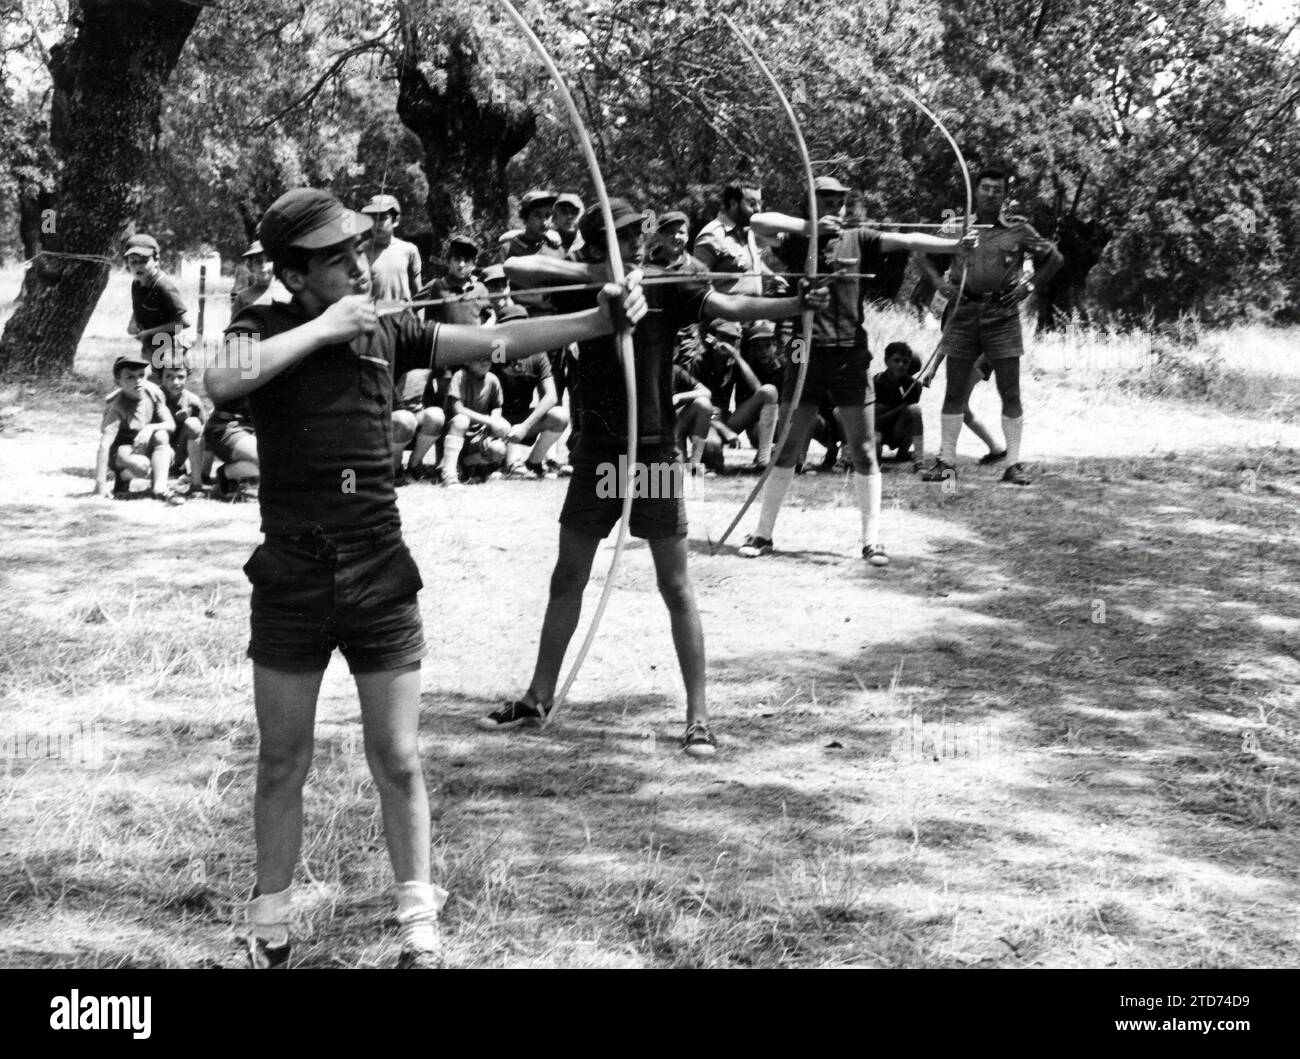 01/01/1975. Some Children Practice Archery at a Summer Camp. Credit: Album / Archivo ABC / D. Cubillo Stock Photo